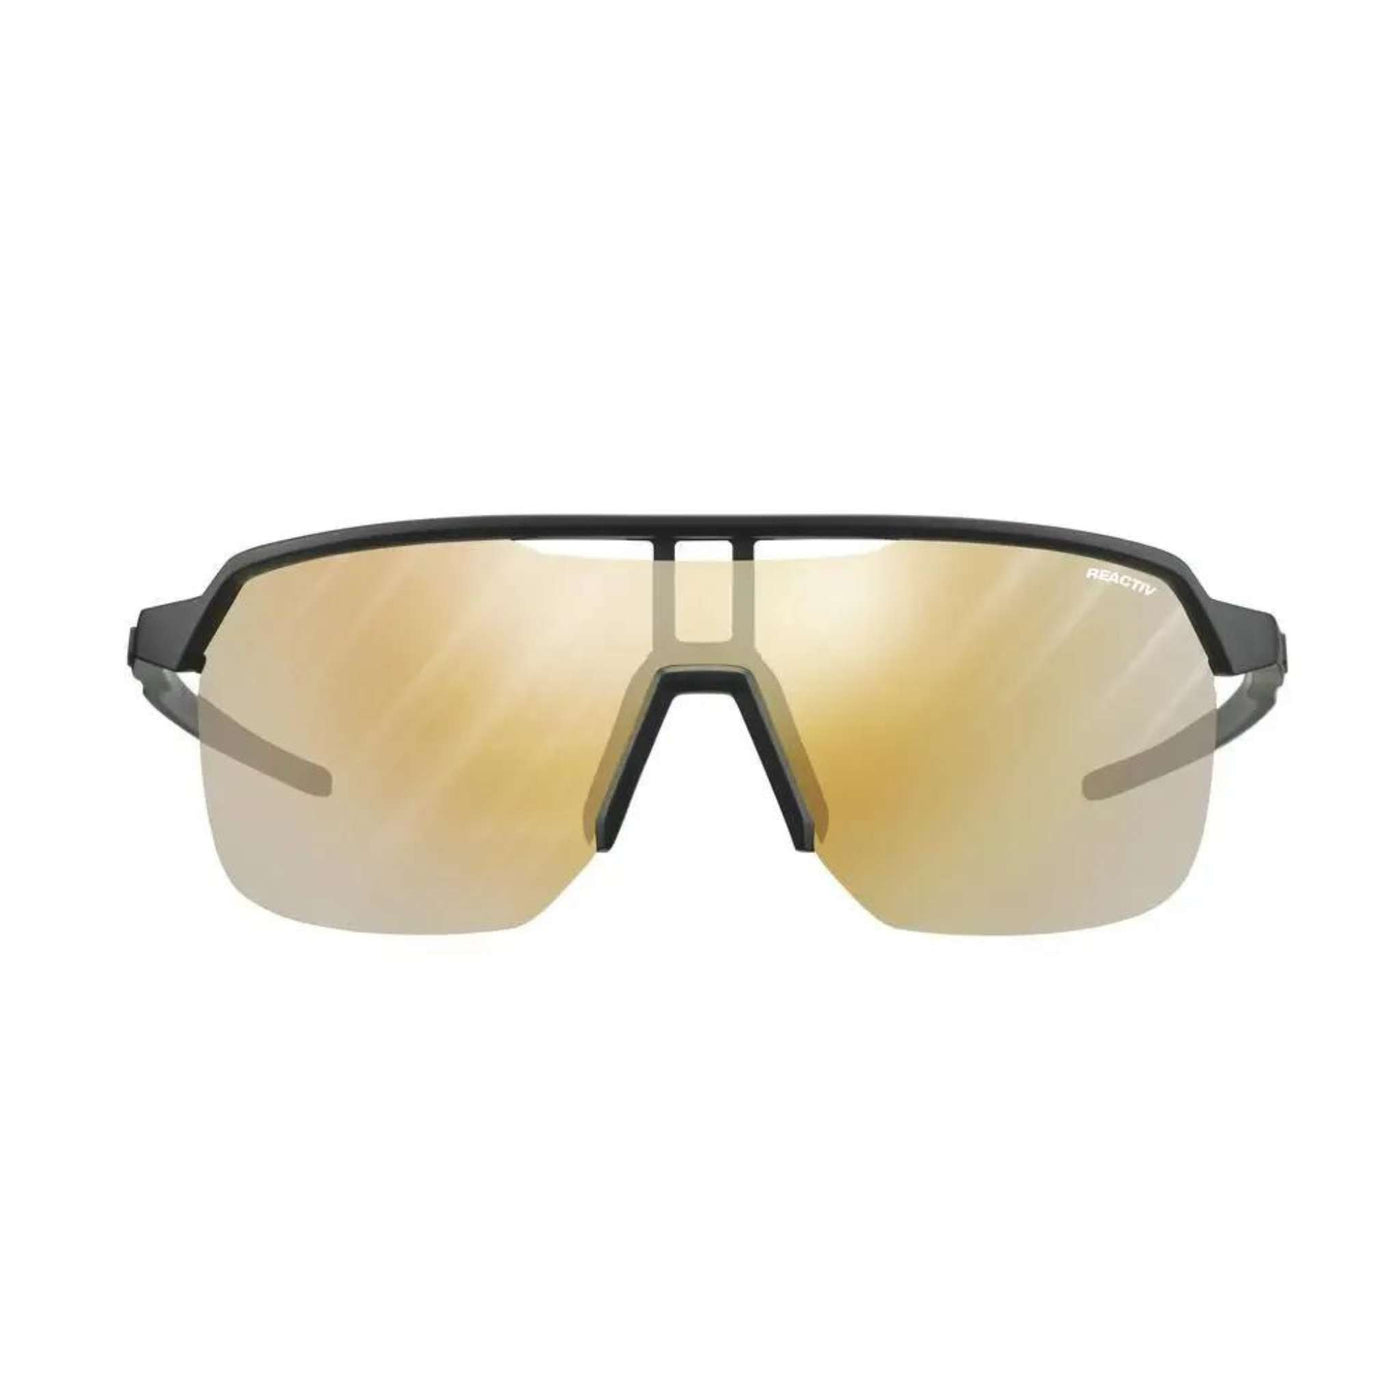 Julbo Frequency Black/Grey Sunglasses - Reactiv 1-3 LAF Lens